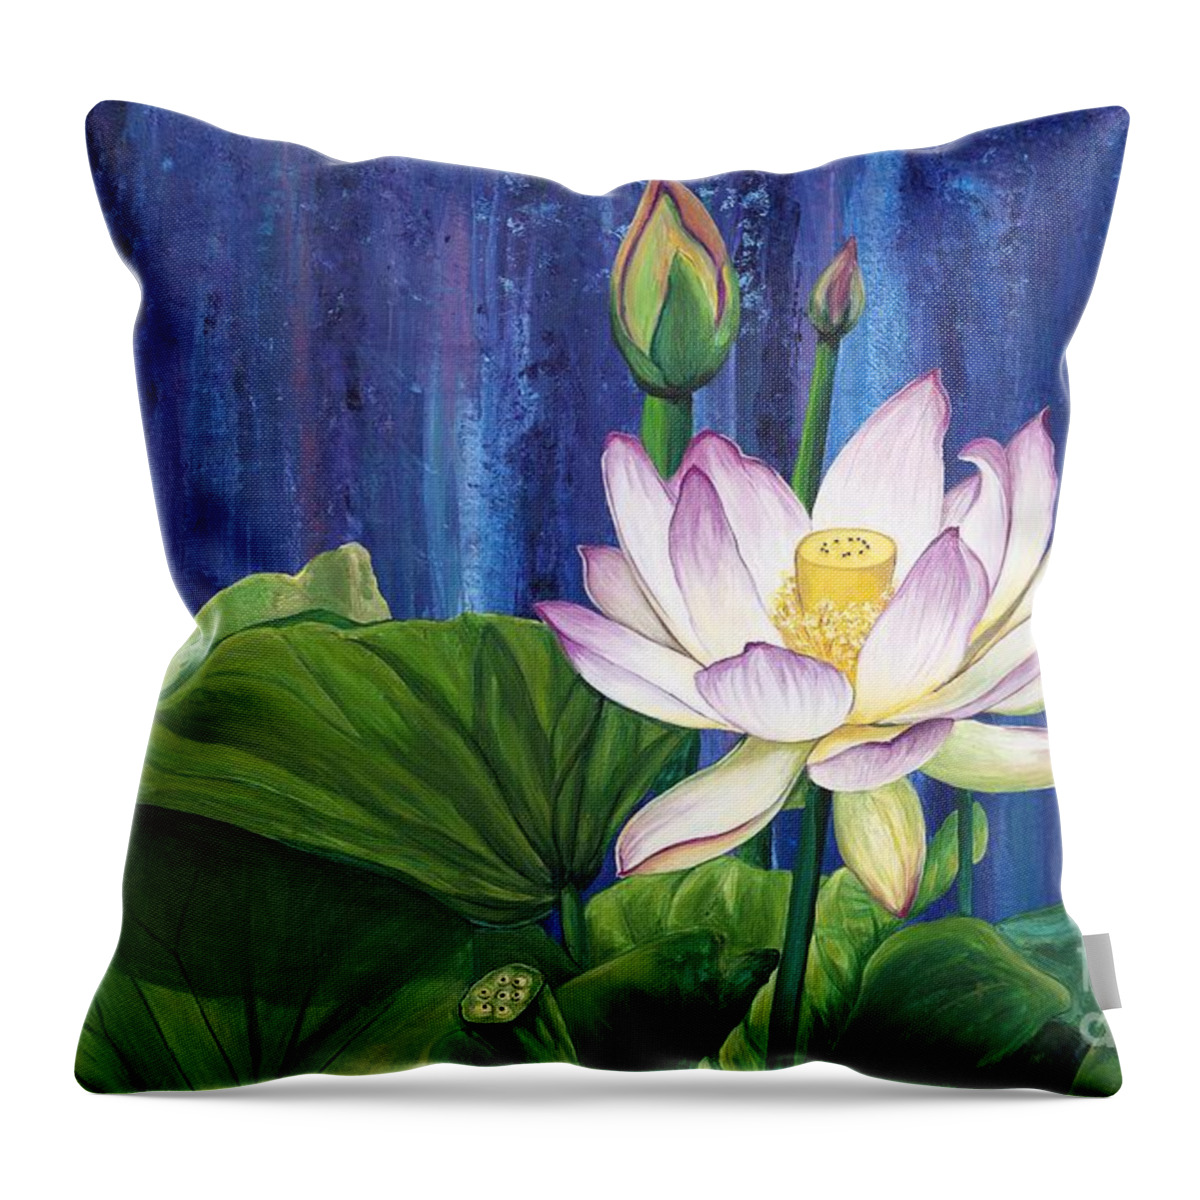 Lotus Flower Throw Pillow featuring the painting Lotus Dream by Patty Vicknair